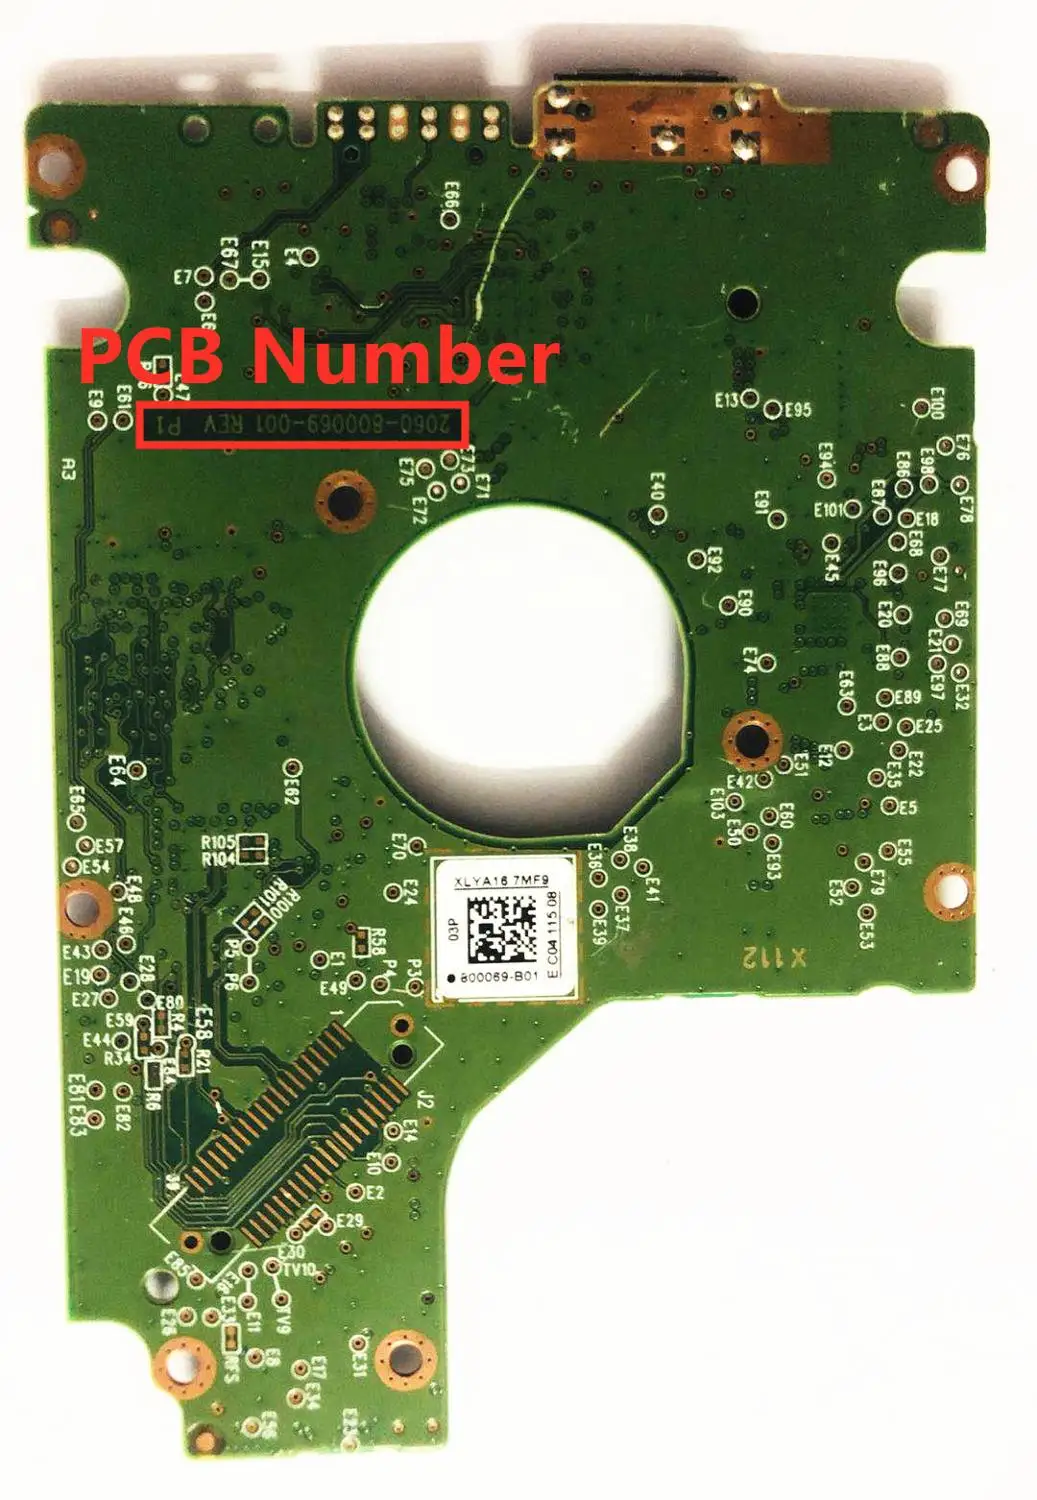 

2060-800069-001 REV P1 / WD HDD печатная плата для 3,0 USB жесткого диска ремонт данных WD10SDZW